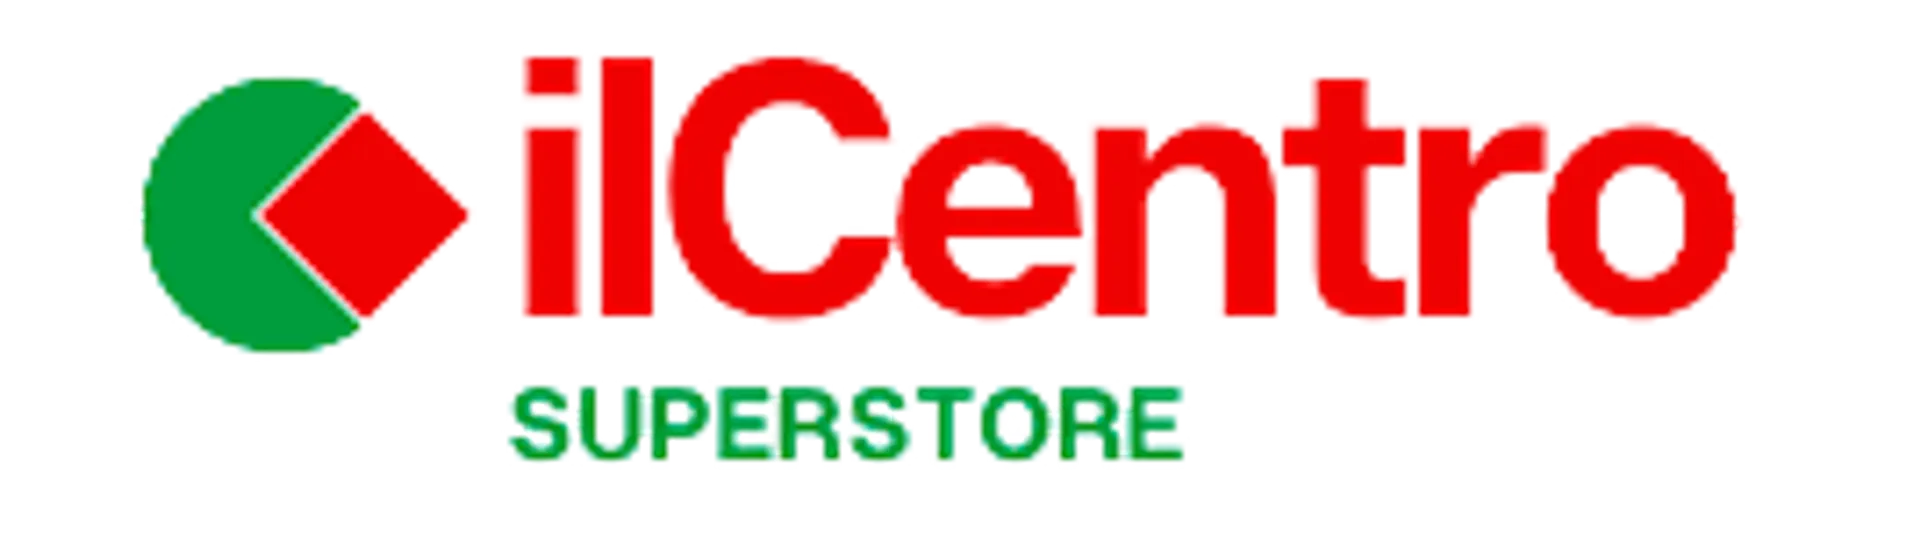 LI CENTRO SUPERSTORE logo